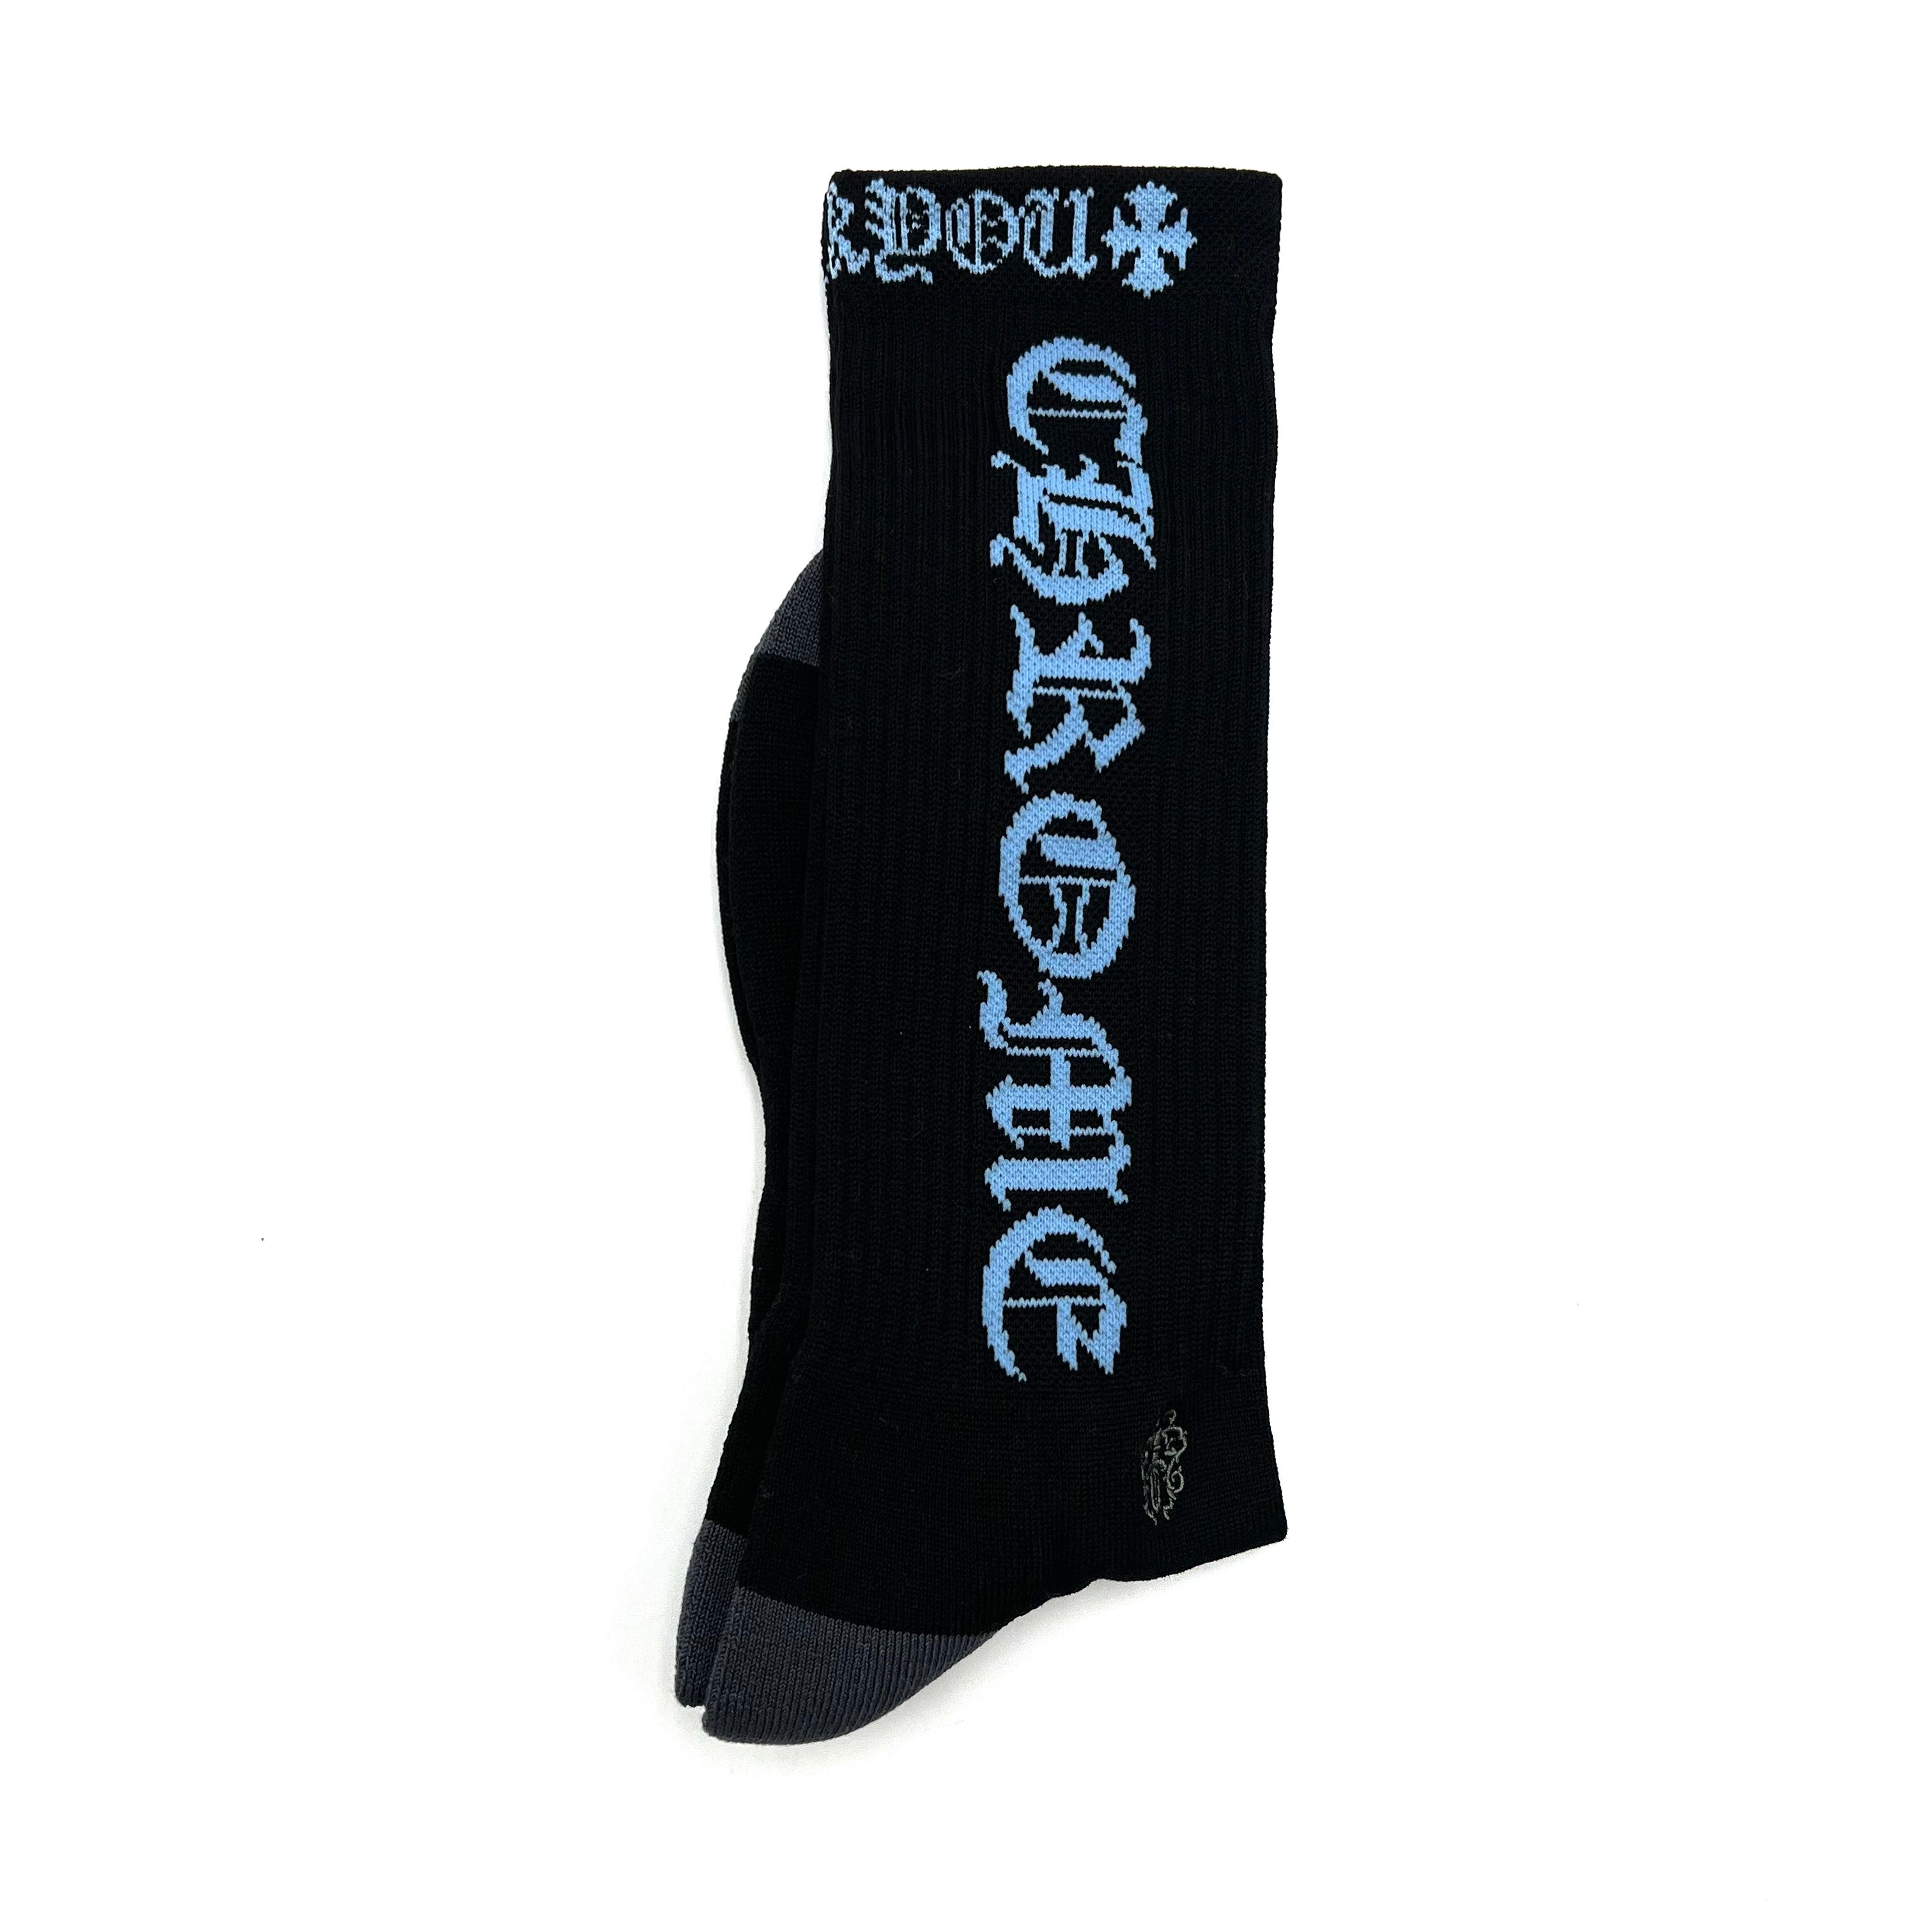 CH Socks Blue/Black